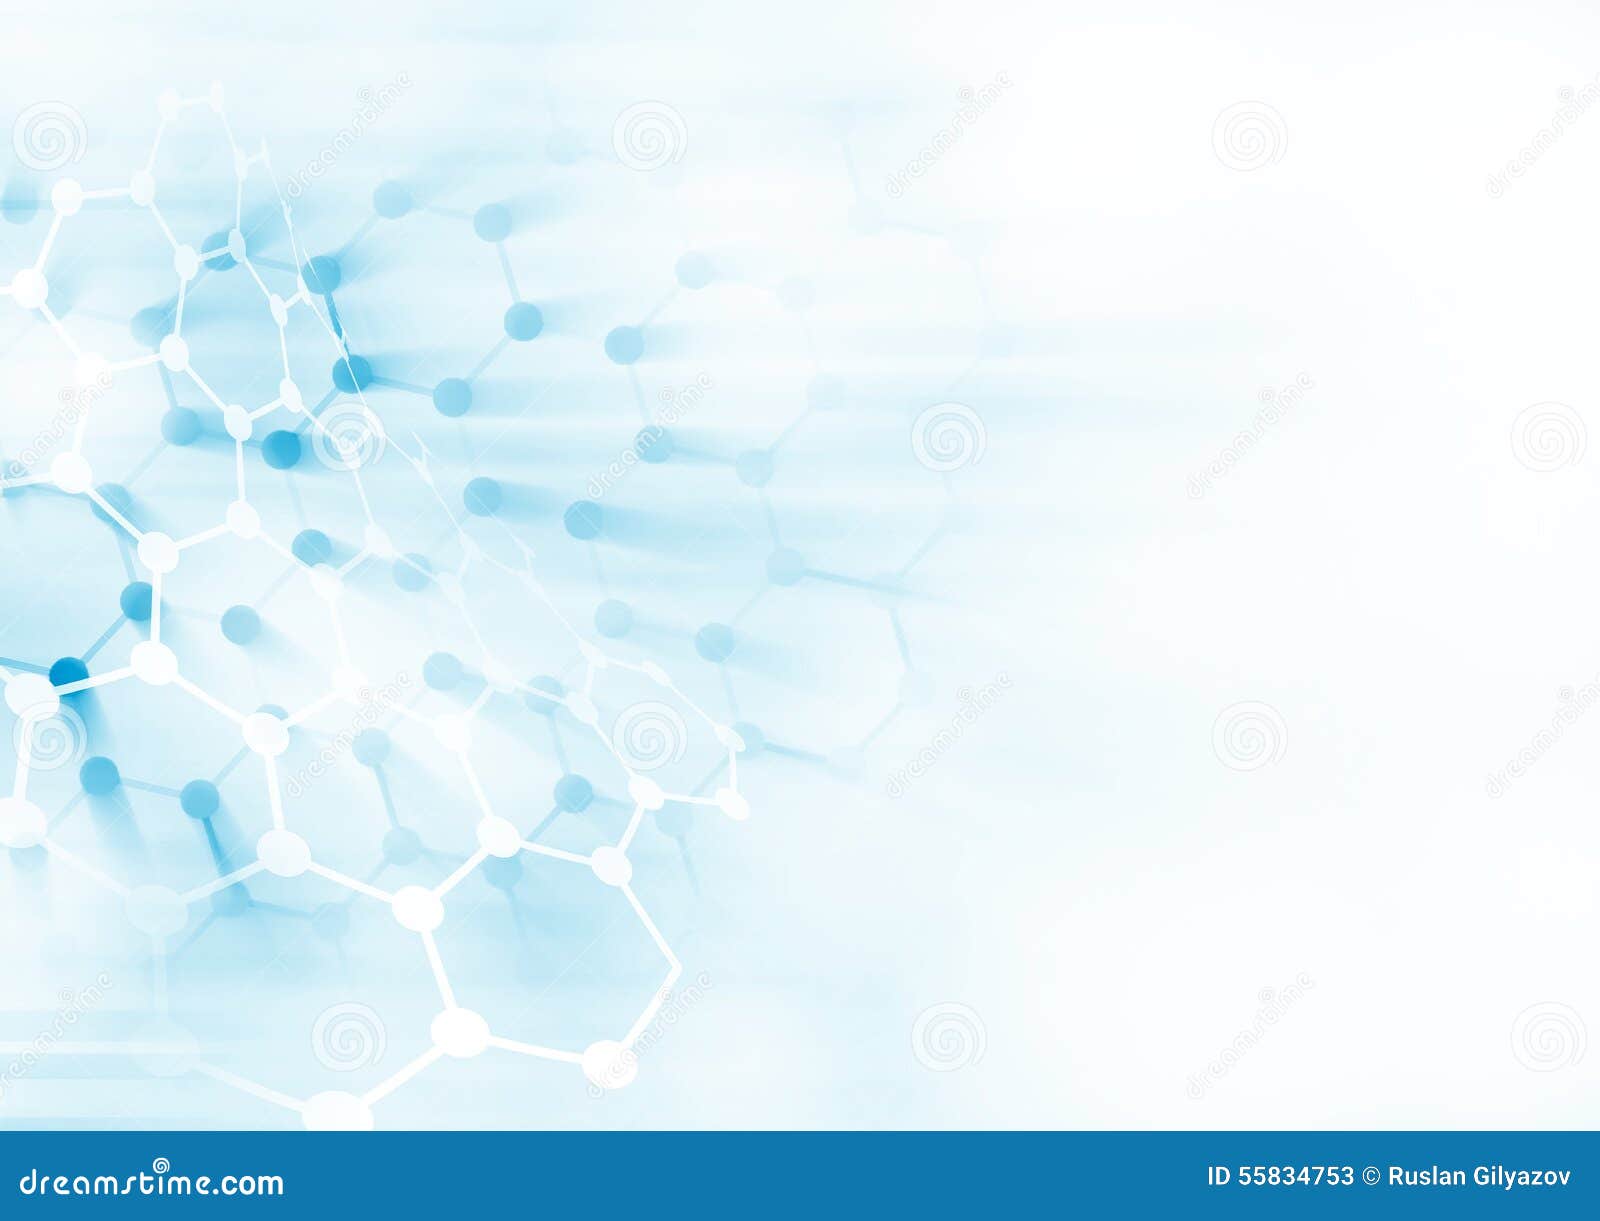 dna molecule structure background